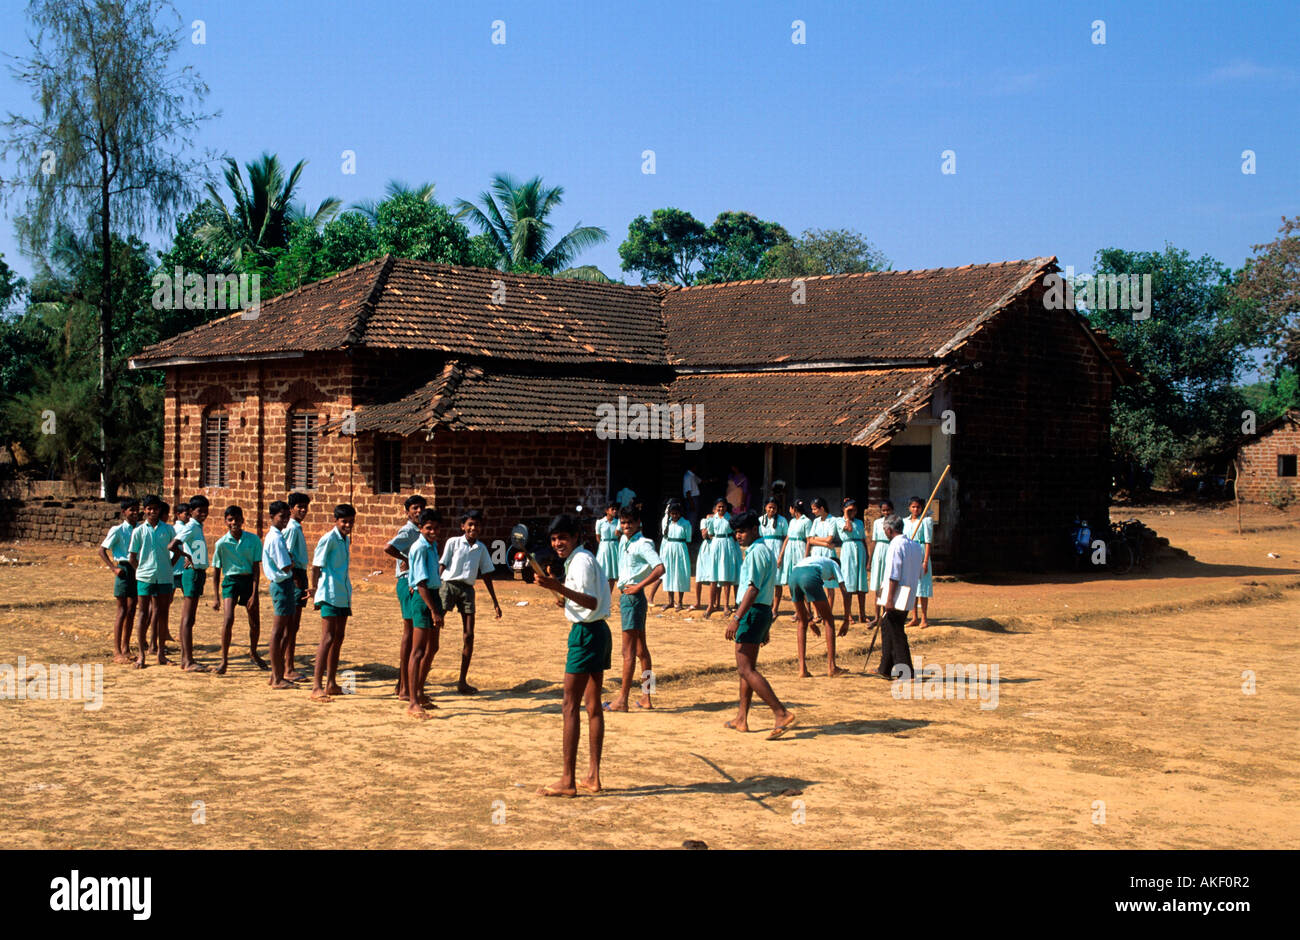 Indien, Goa, District Pernem, Kinder vor Schule in Dorf Stock Photo